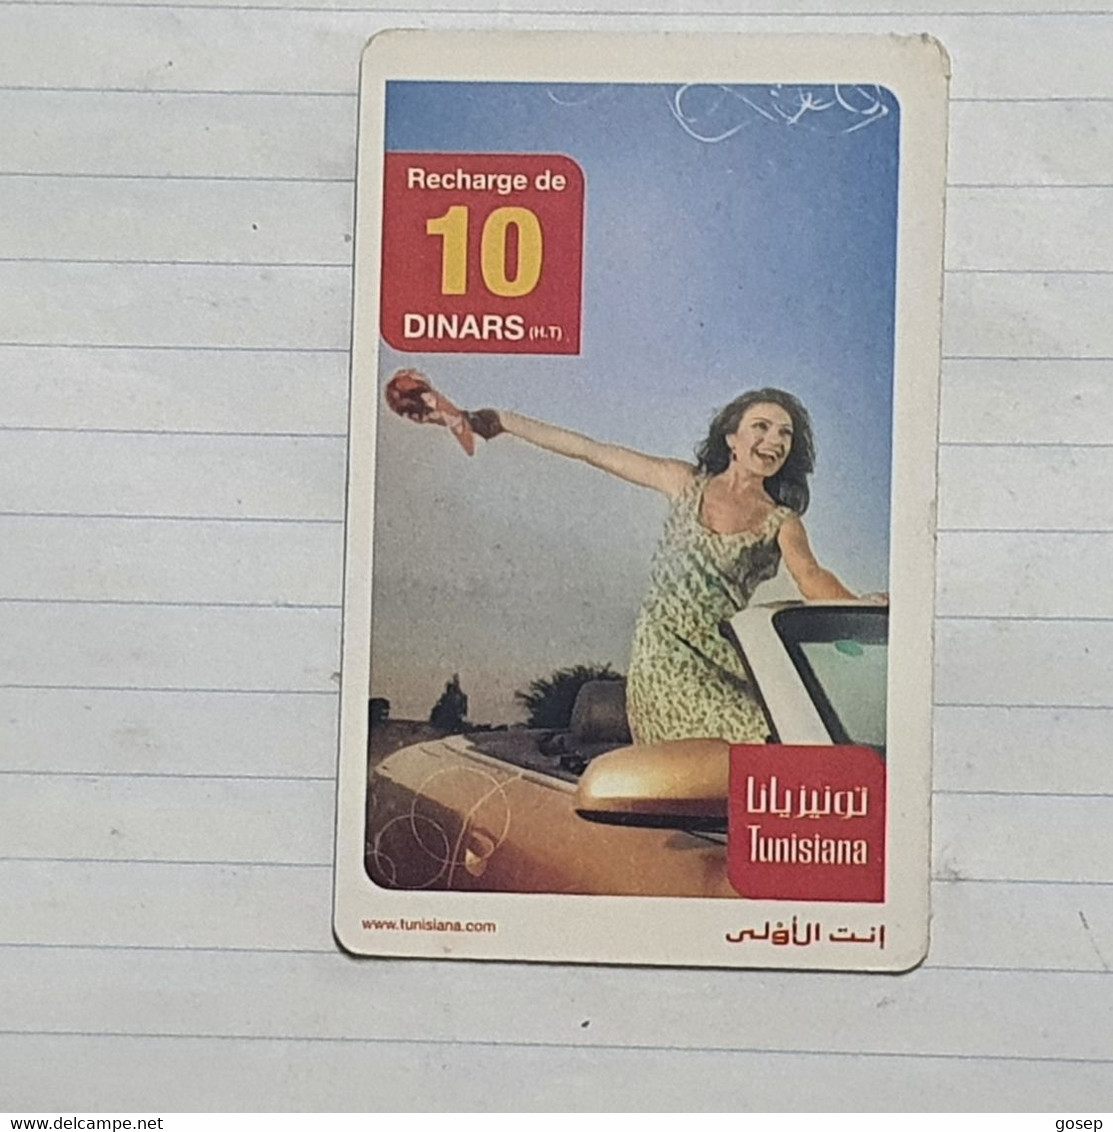 TUNISIA-(TUN-REF-TUN-22D)-GIRL IN CAR-(145)-(464-3996-782-6918)-(look From Out Side Card Barcode)-used Card - Tunesië